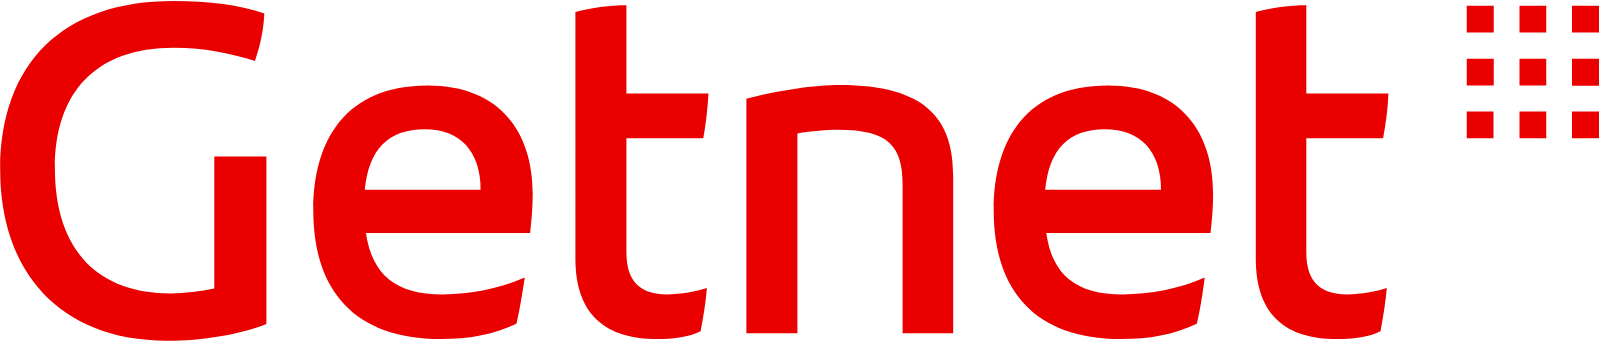 Getnet logo large (transparent PNG)